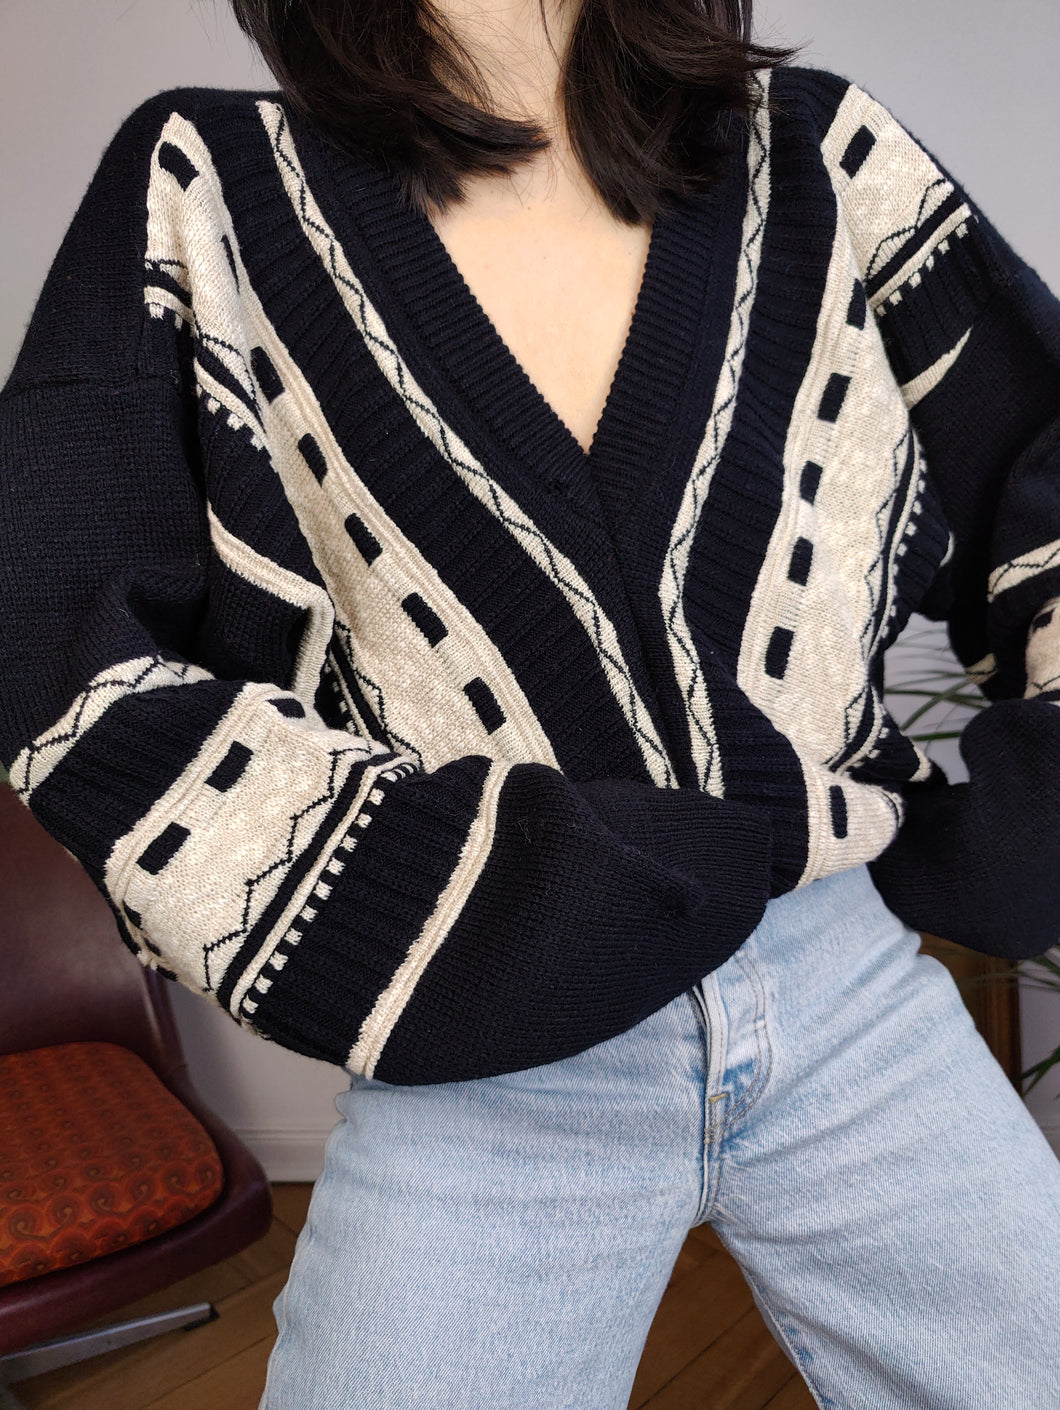 Vintage sweater knit black white crazy pattern V neck pullover jumper women men unisex XL